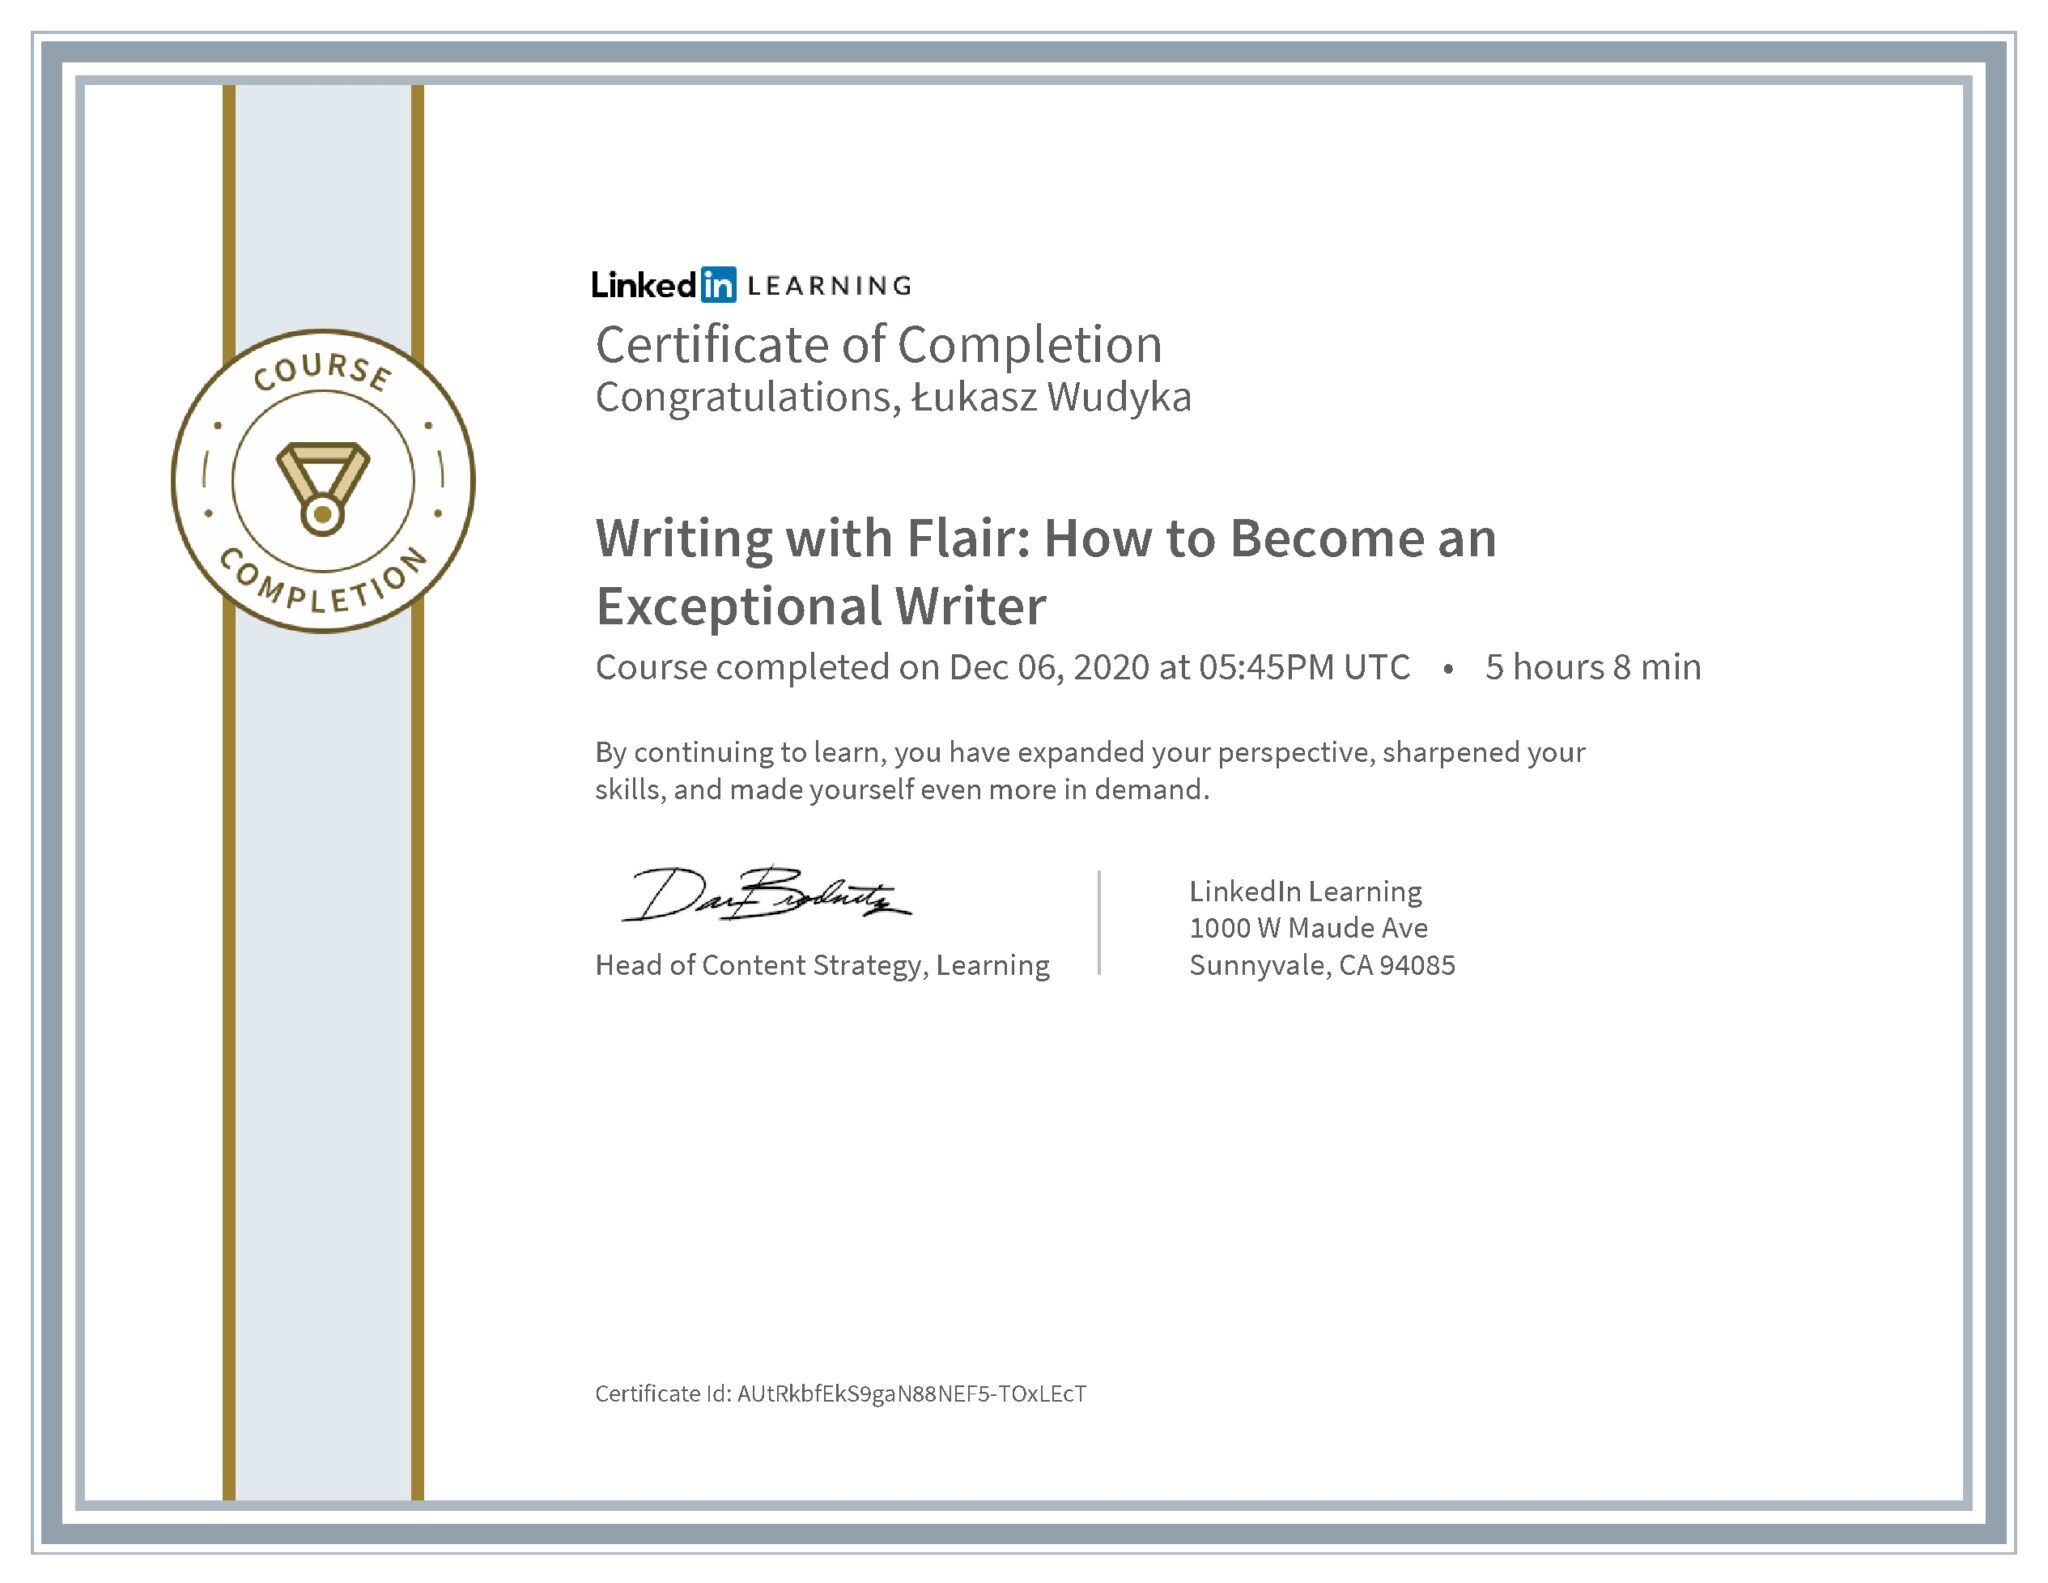 Łukasz Wudyka certyfikat LinkedIn Writing with Flair: How to Become an Exceptional Writer